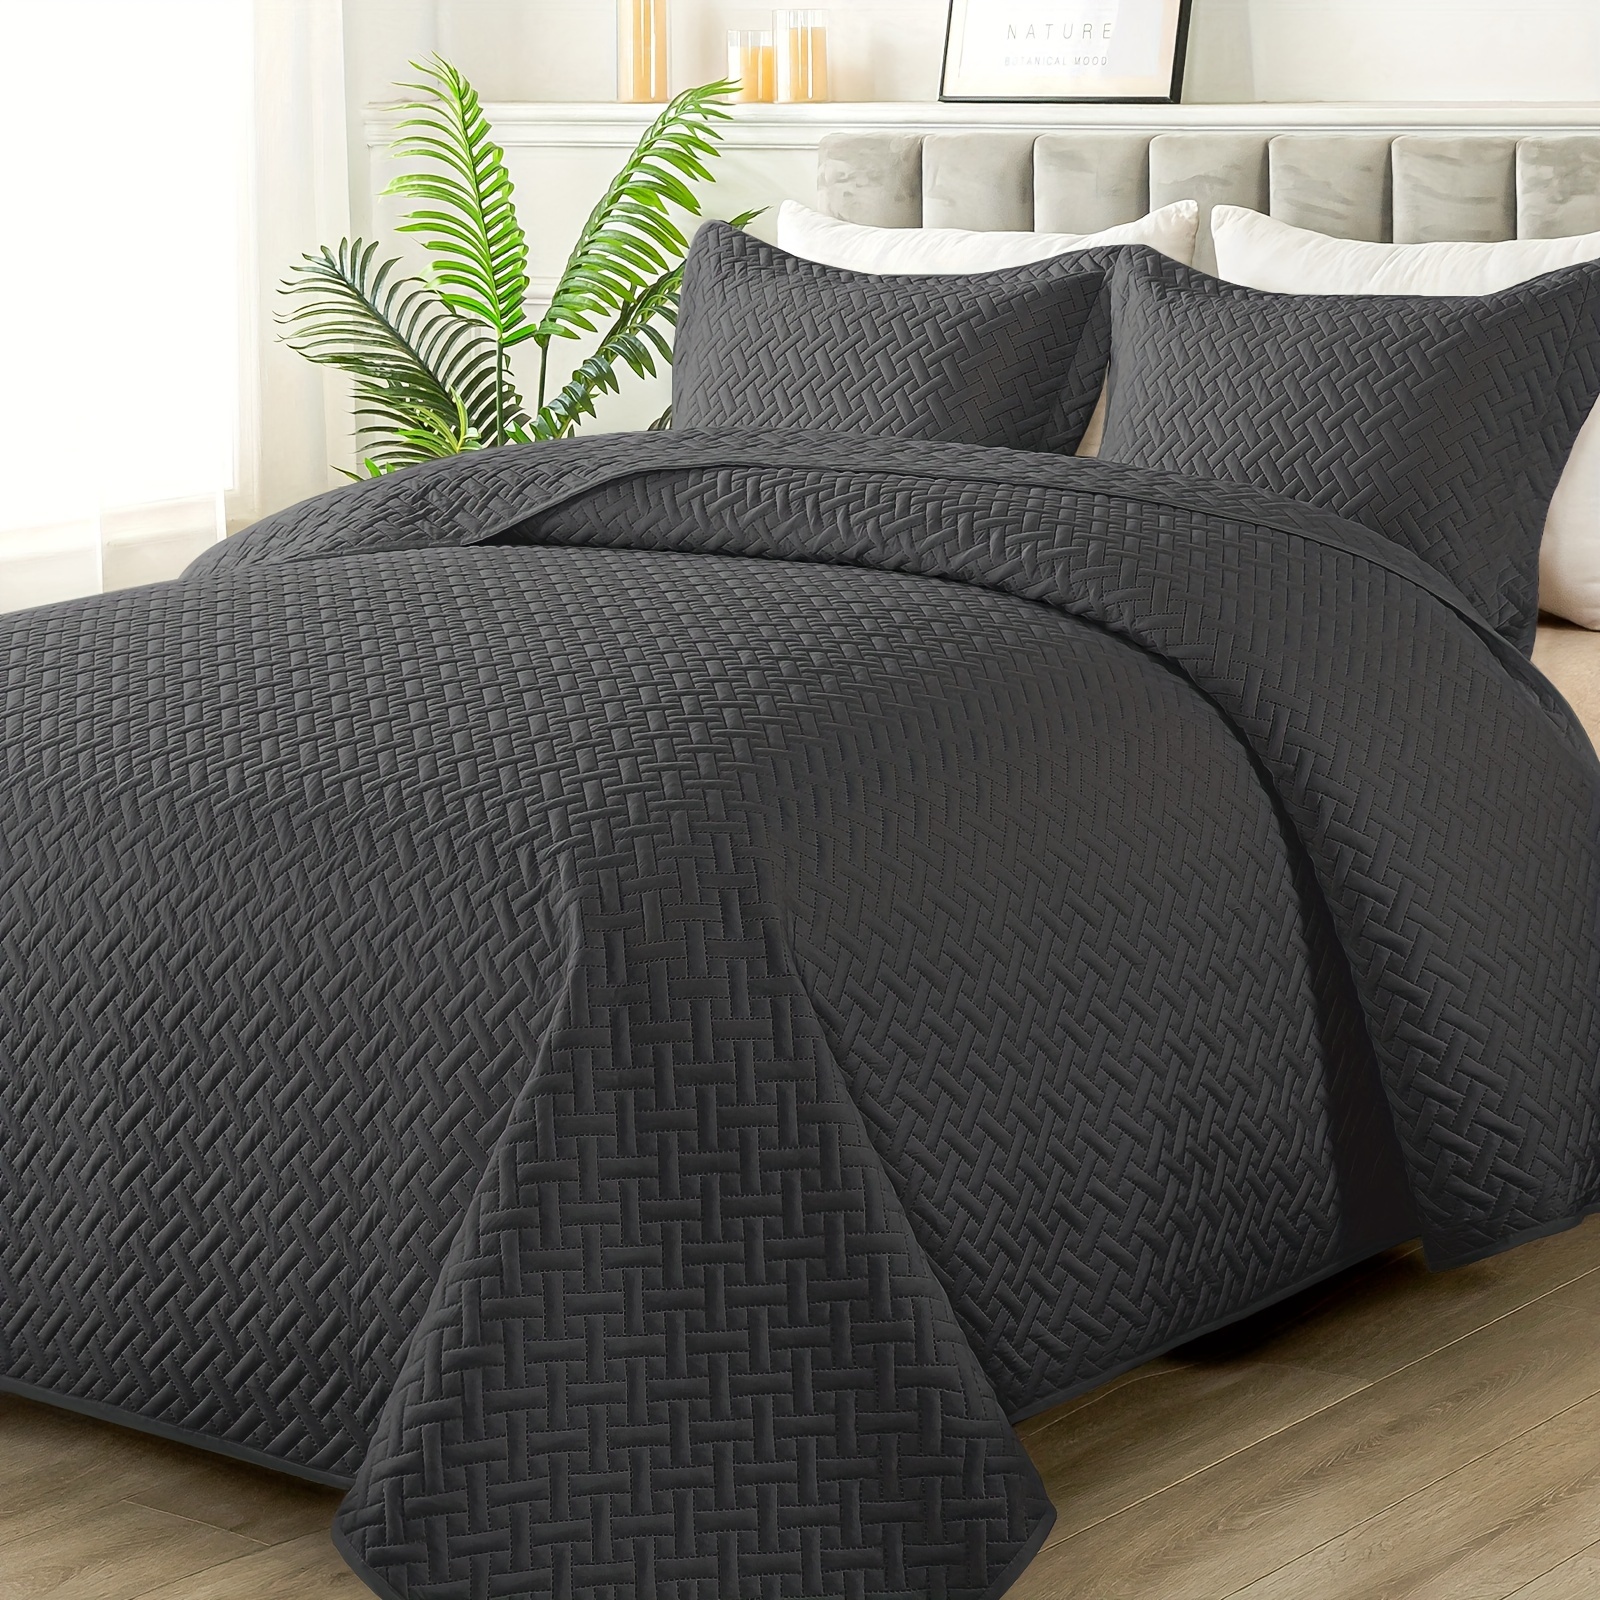 

Quilt Set Soft Lightweight Quilts Summer Quilted Bedspreads - Reversible Coverlet Bedding Set For All Season 3 Piece (1 Quilt, 2 Pillow Sham)